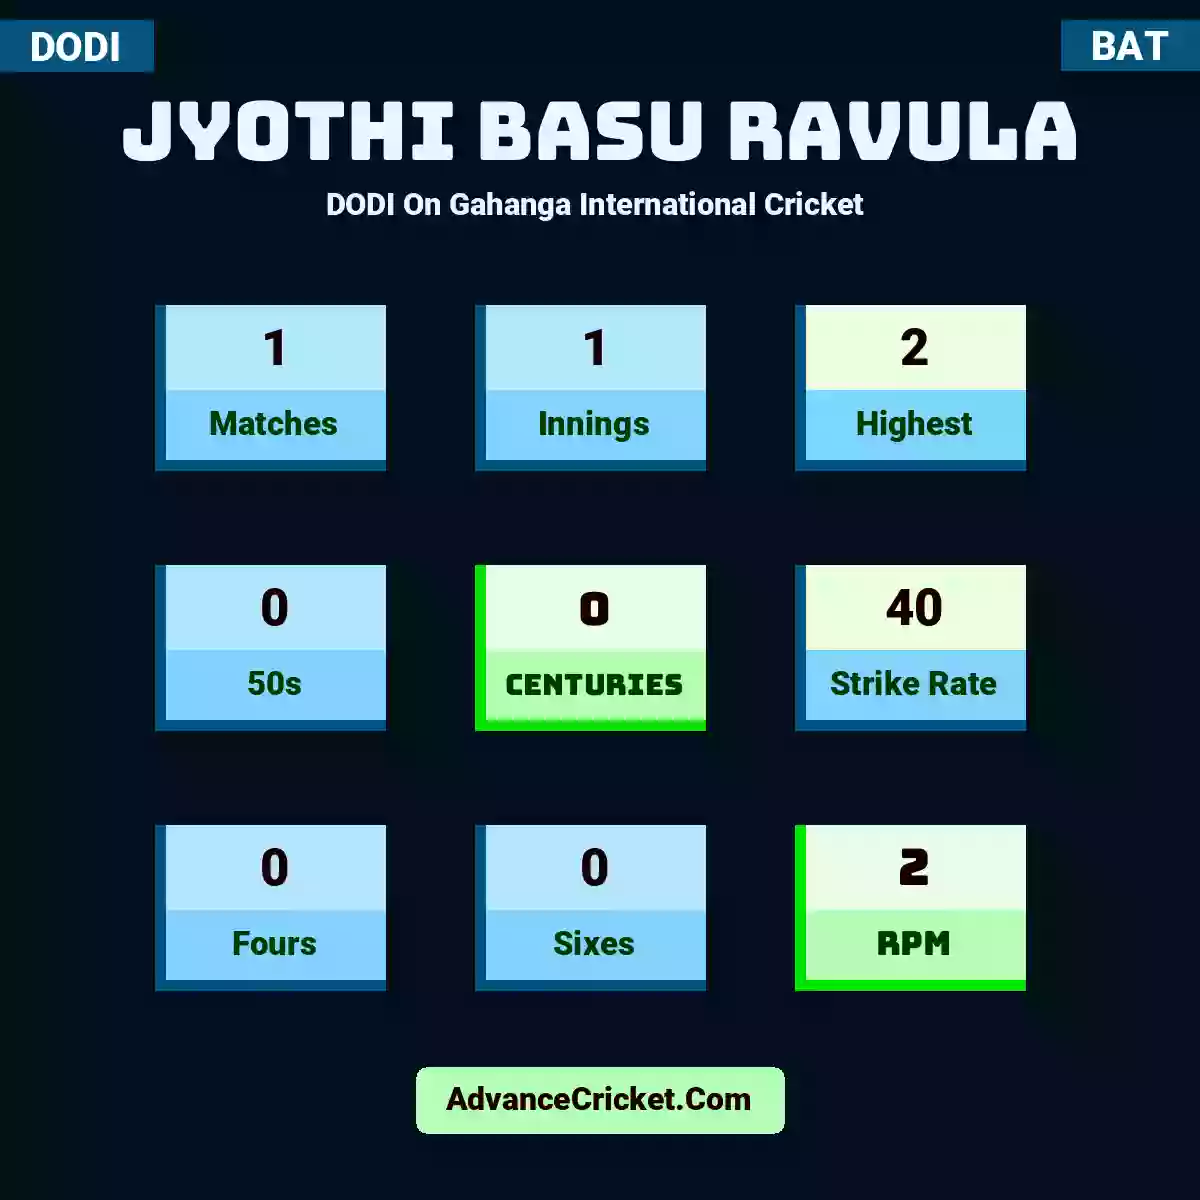 Jyothi Basu Ravula DODI  On Gahanga International Cricket , Jyothi Basu Ravula played 1 matches, scored 2 runs as highest, 0 half-centuries, and 0 centuries, with a strike rate of 40. J.Basu.Ravula hit 0 fours and 0 sixes, with an RPM of 2.